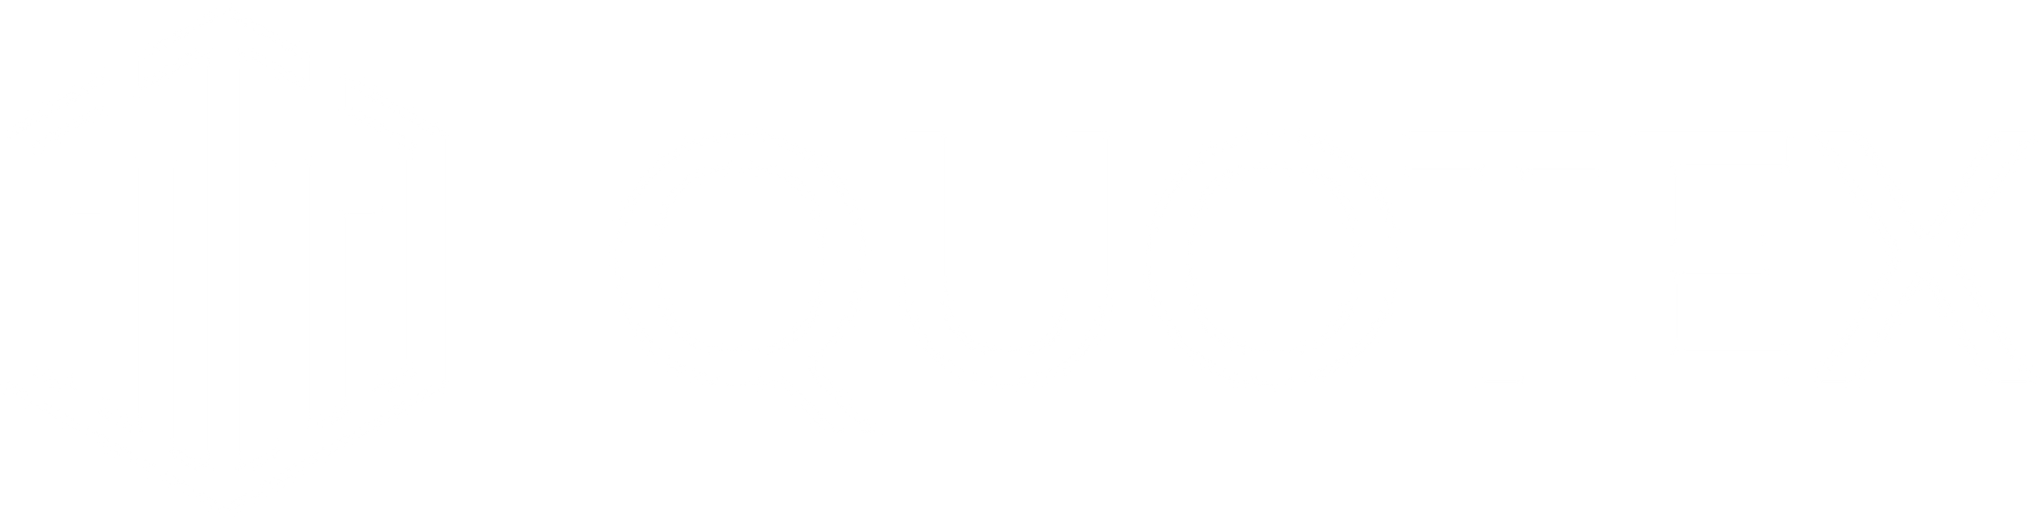 Quotex logo